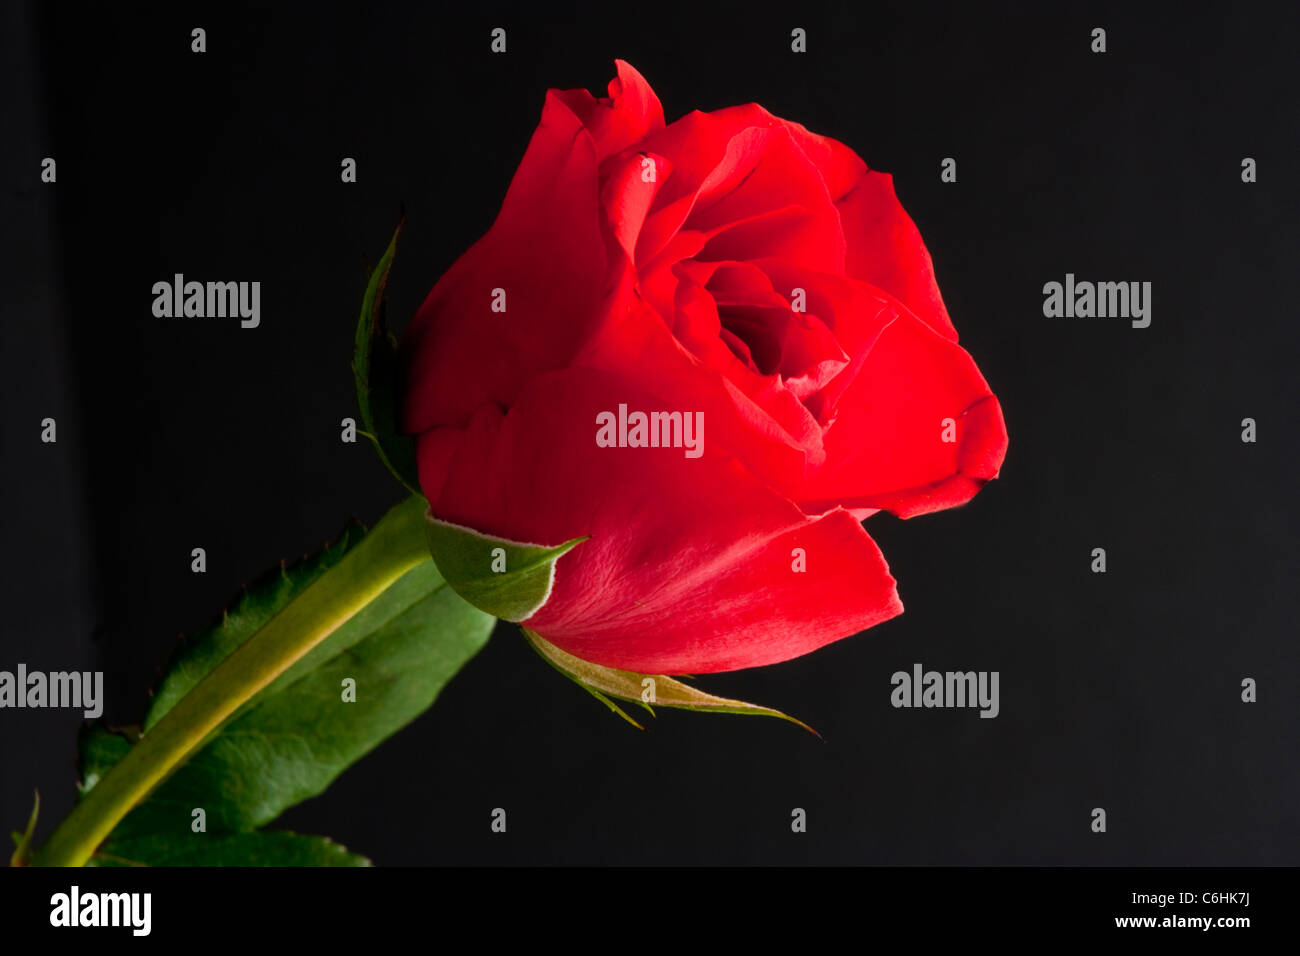 red rosebud close up on black background Stock Photo